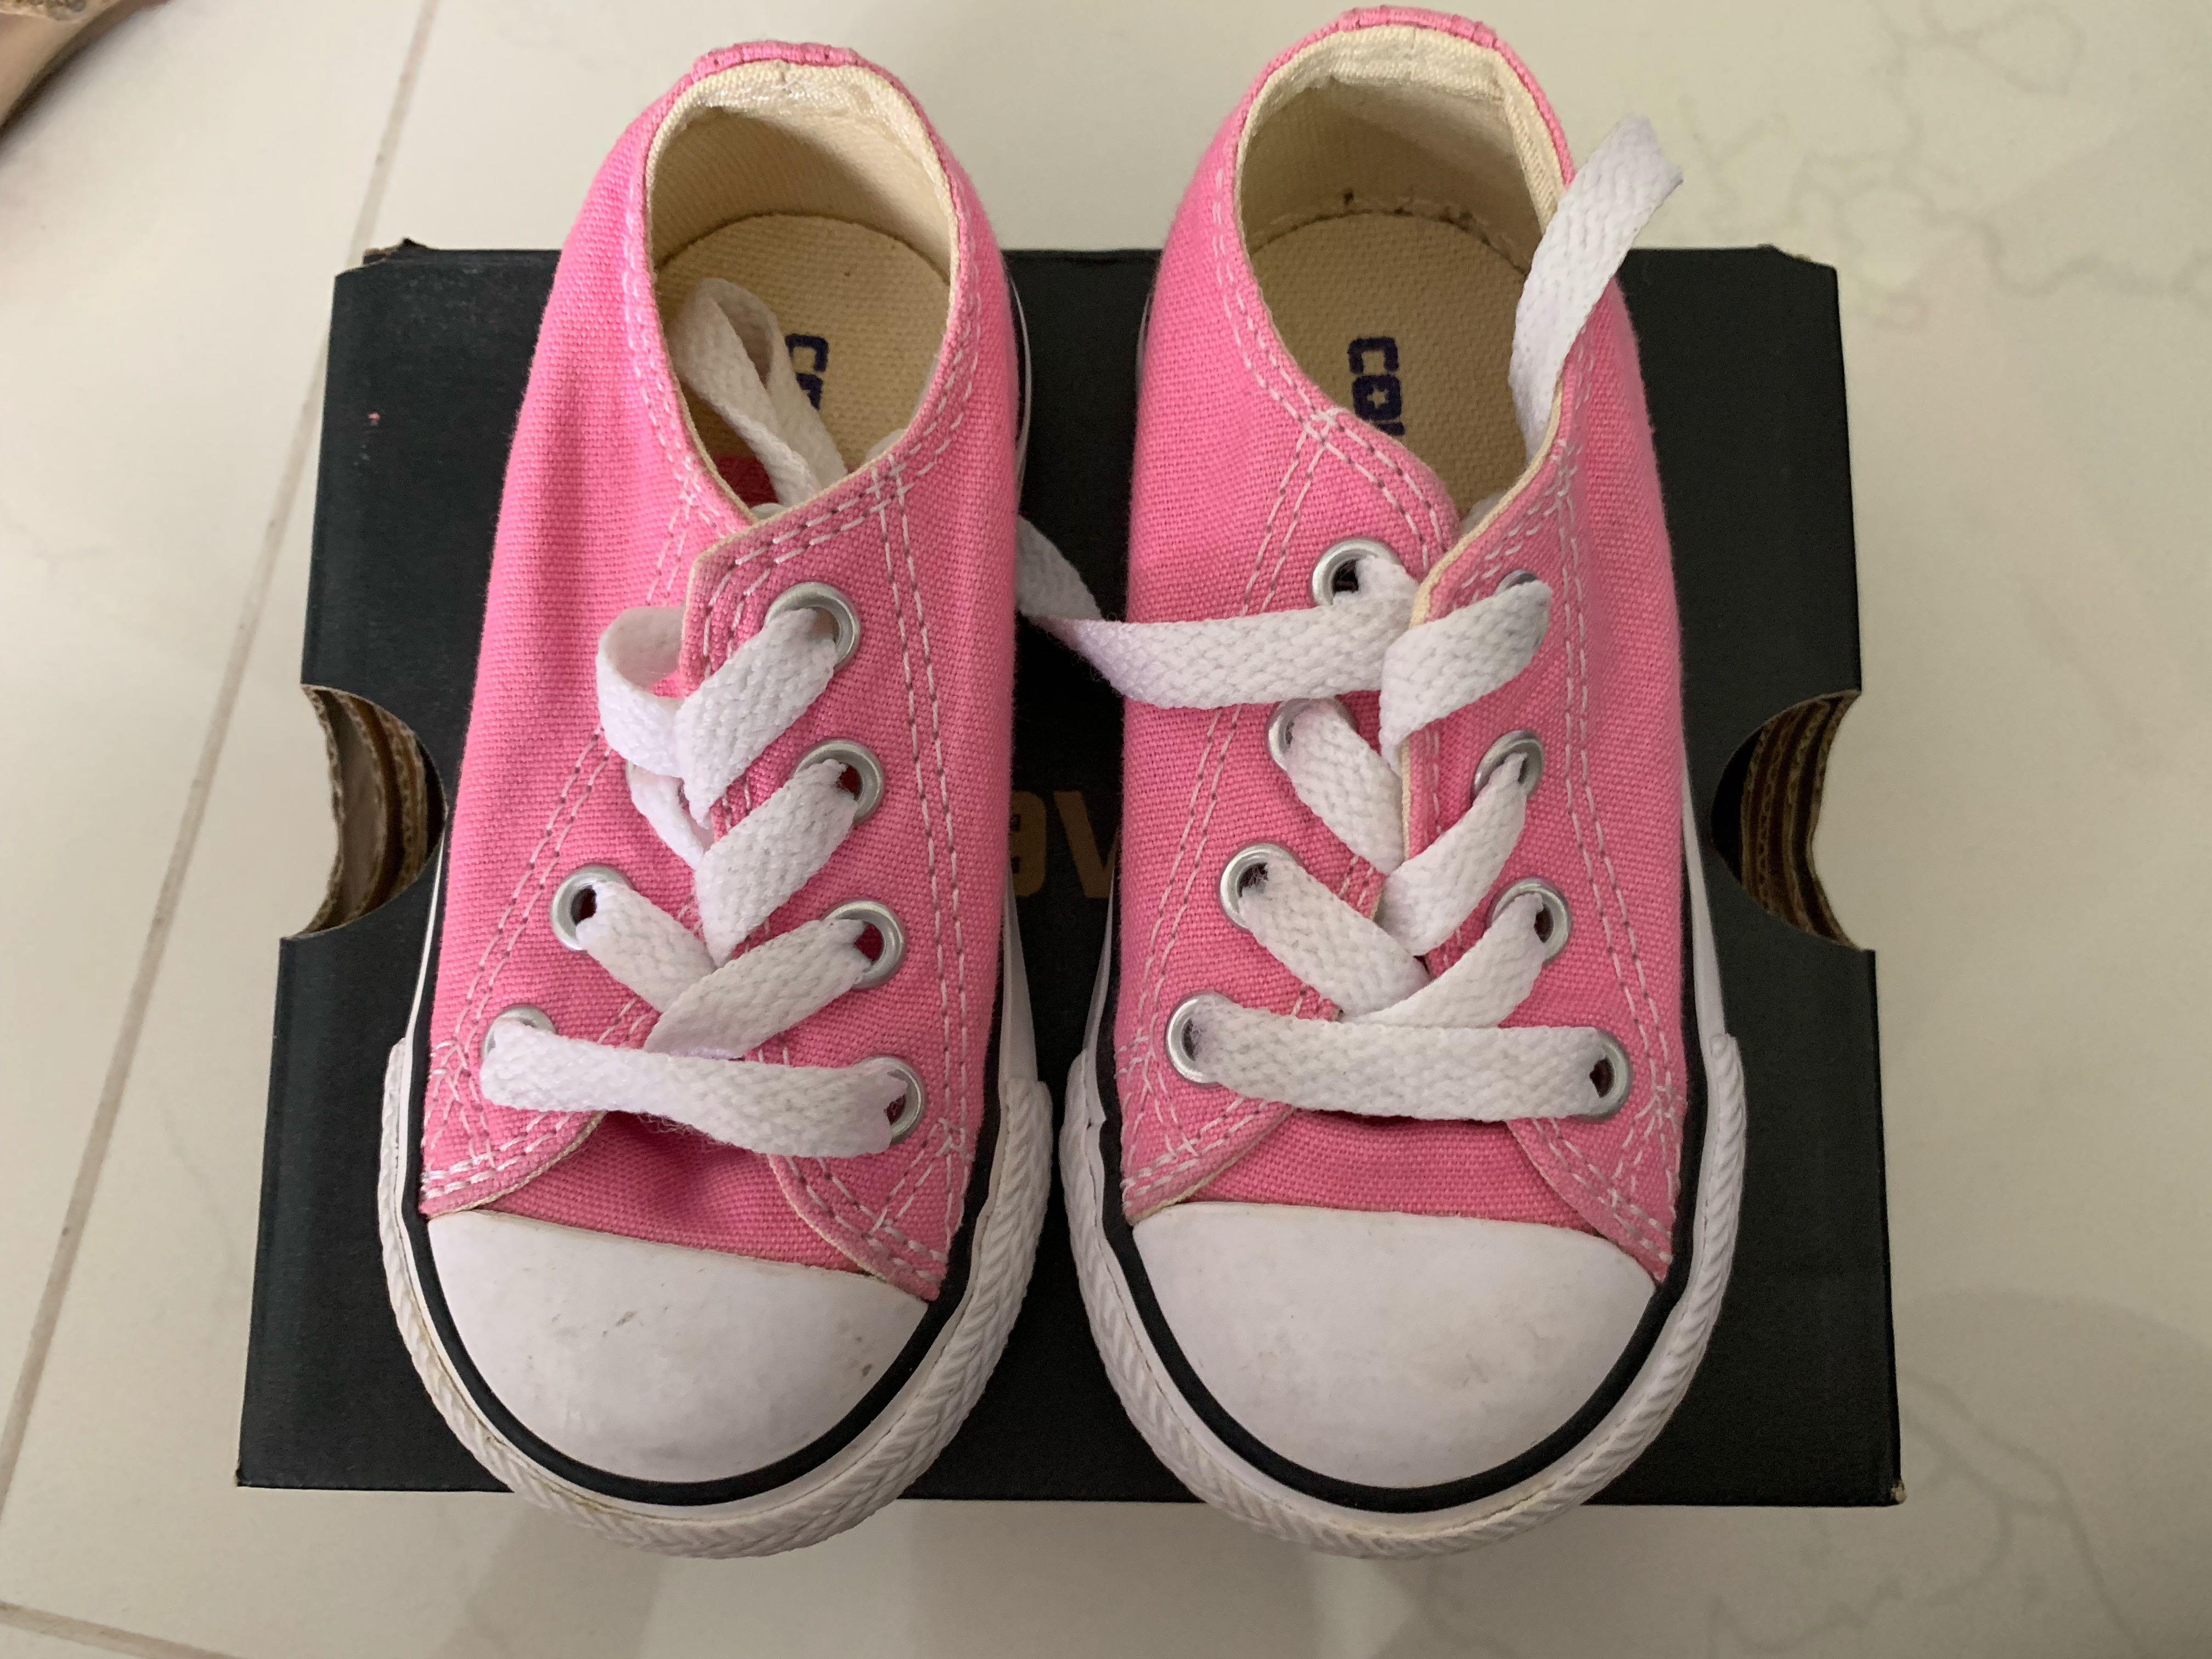 pink converse size 2